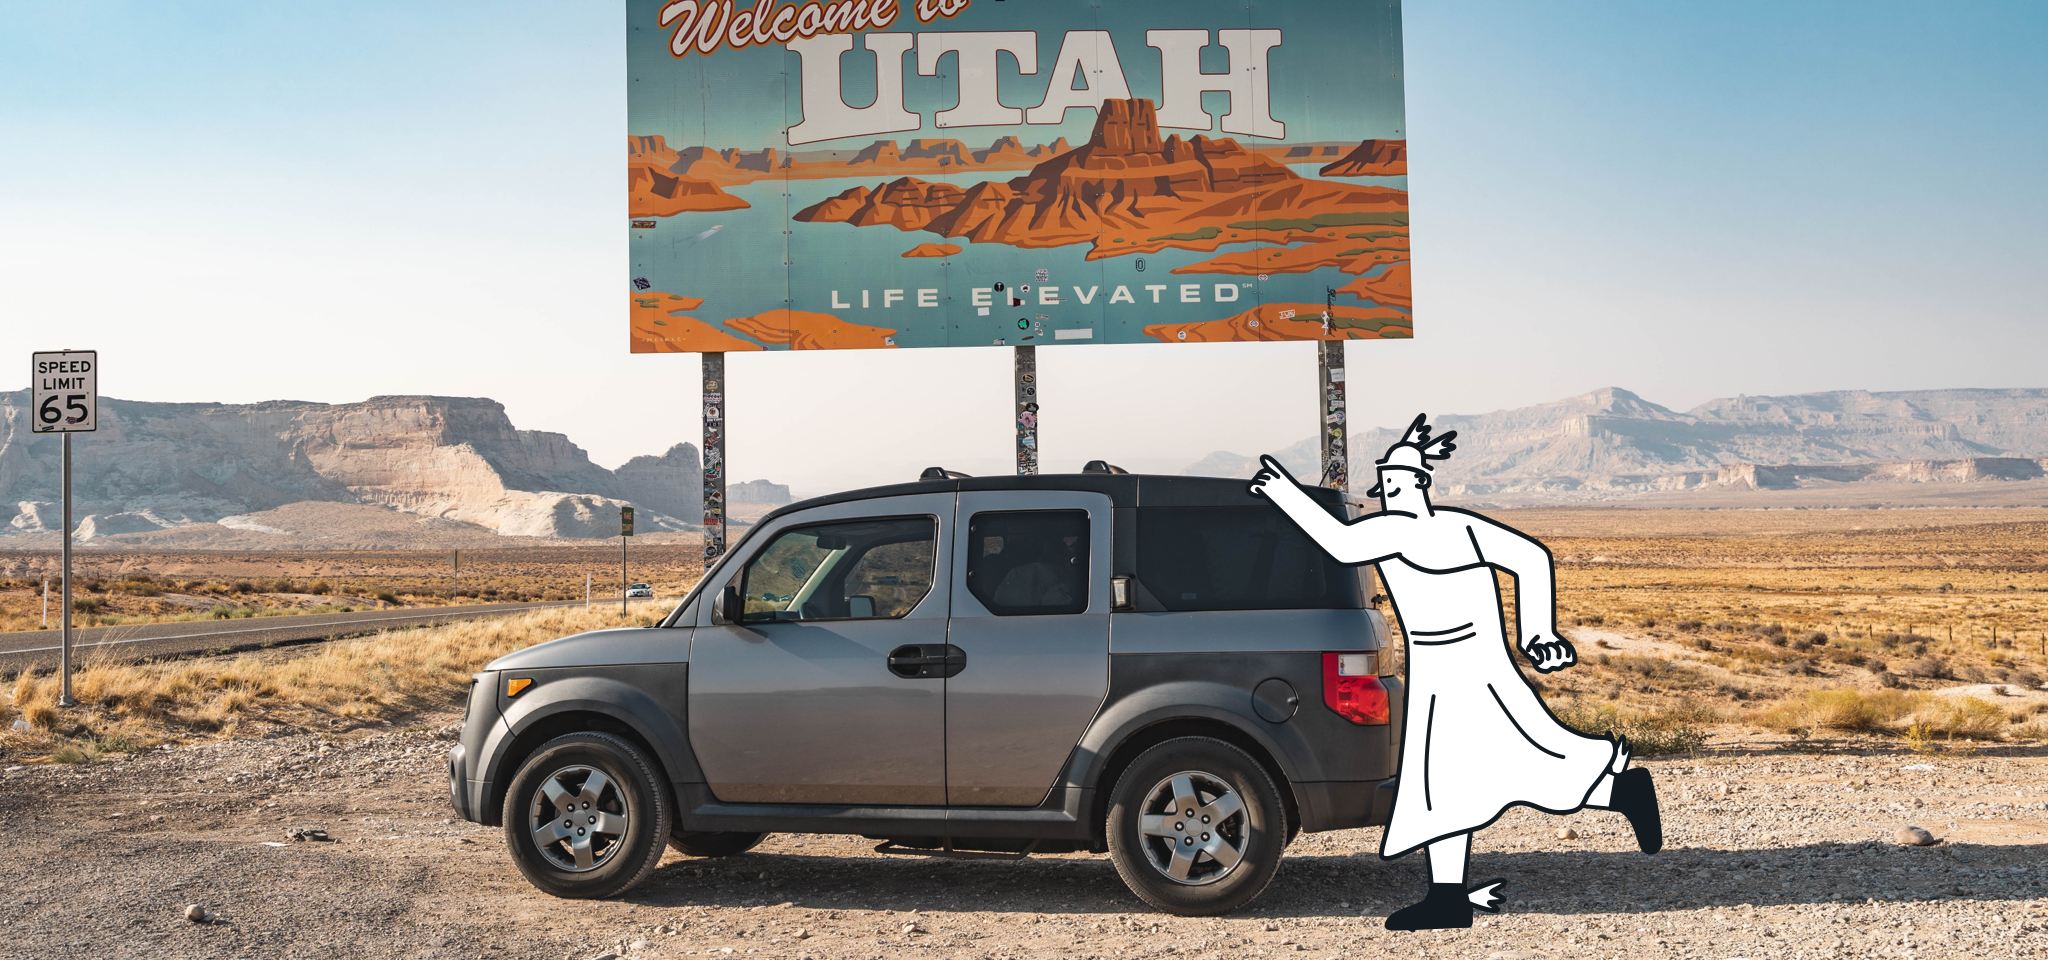 Hermes chasing a car in front of a Utah billboard